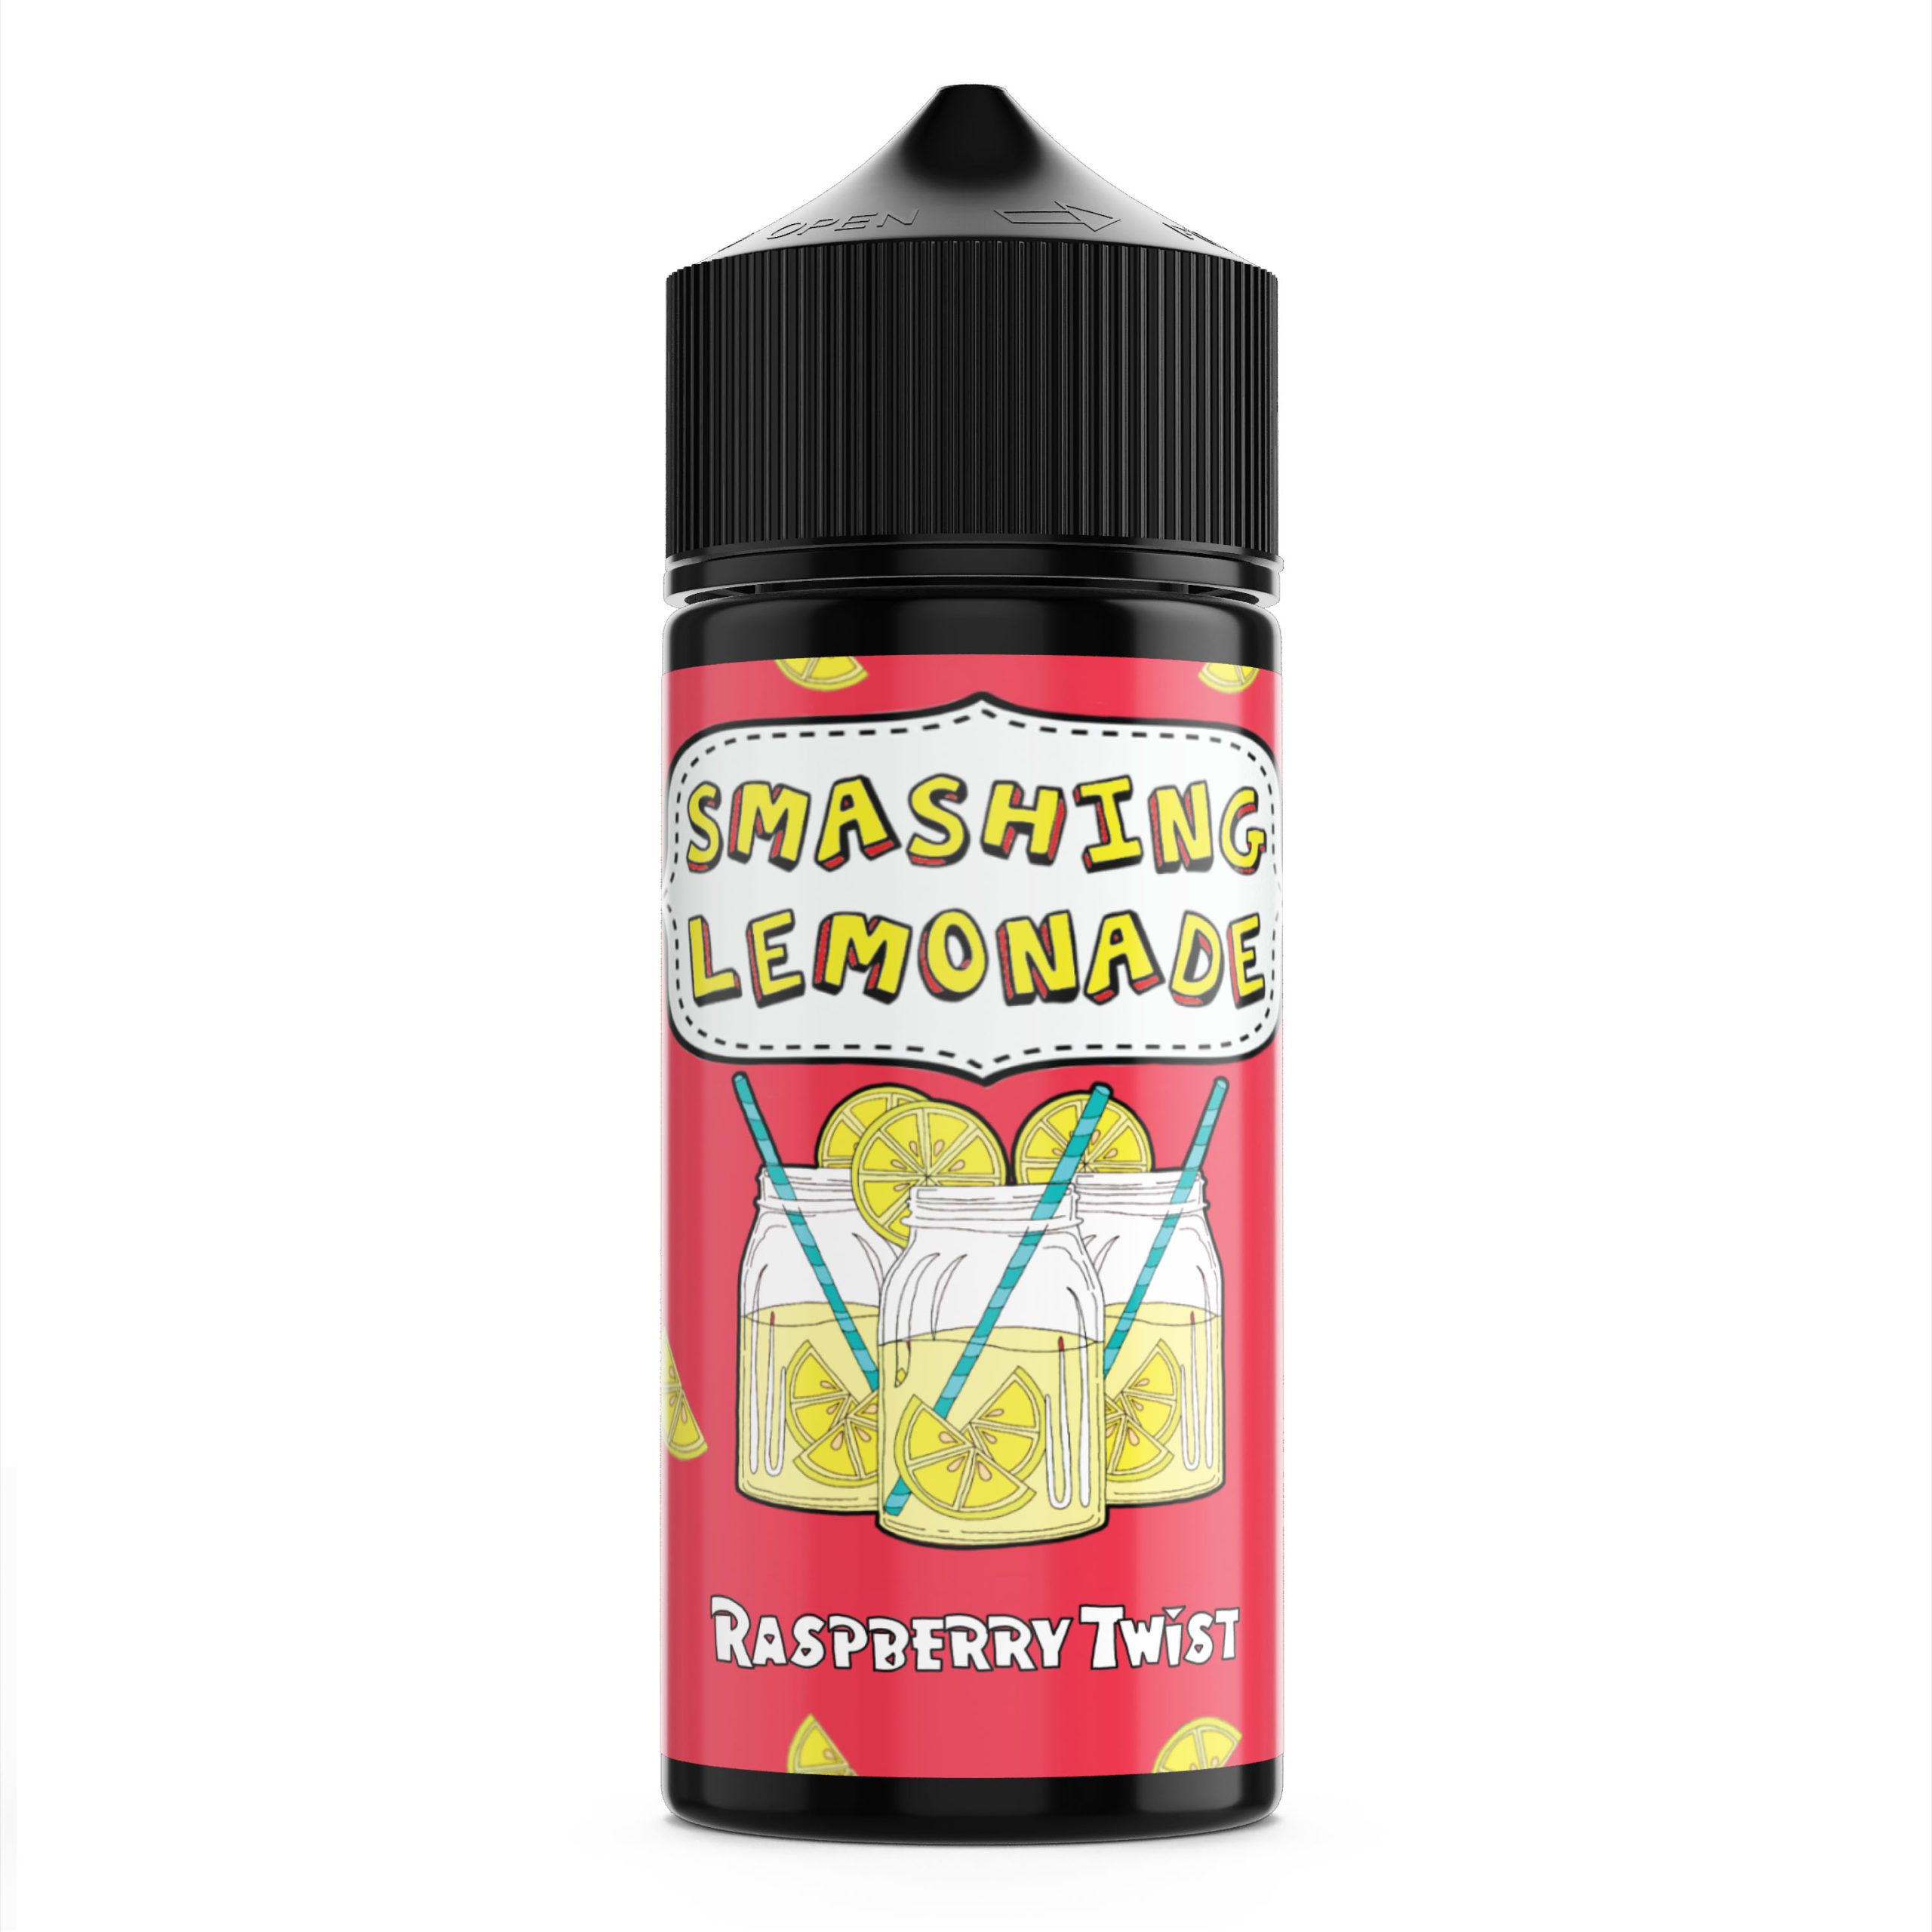 images/virtuemart/product/Raspberry Twist - Smashing Lemonade (100ml).jpg